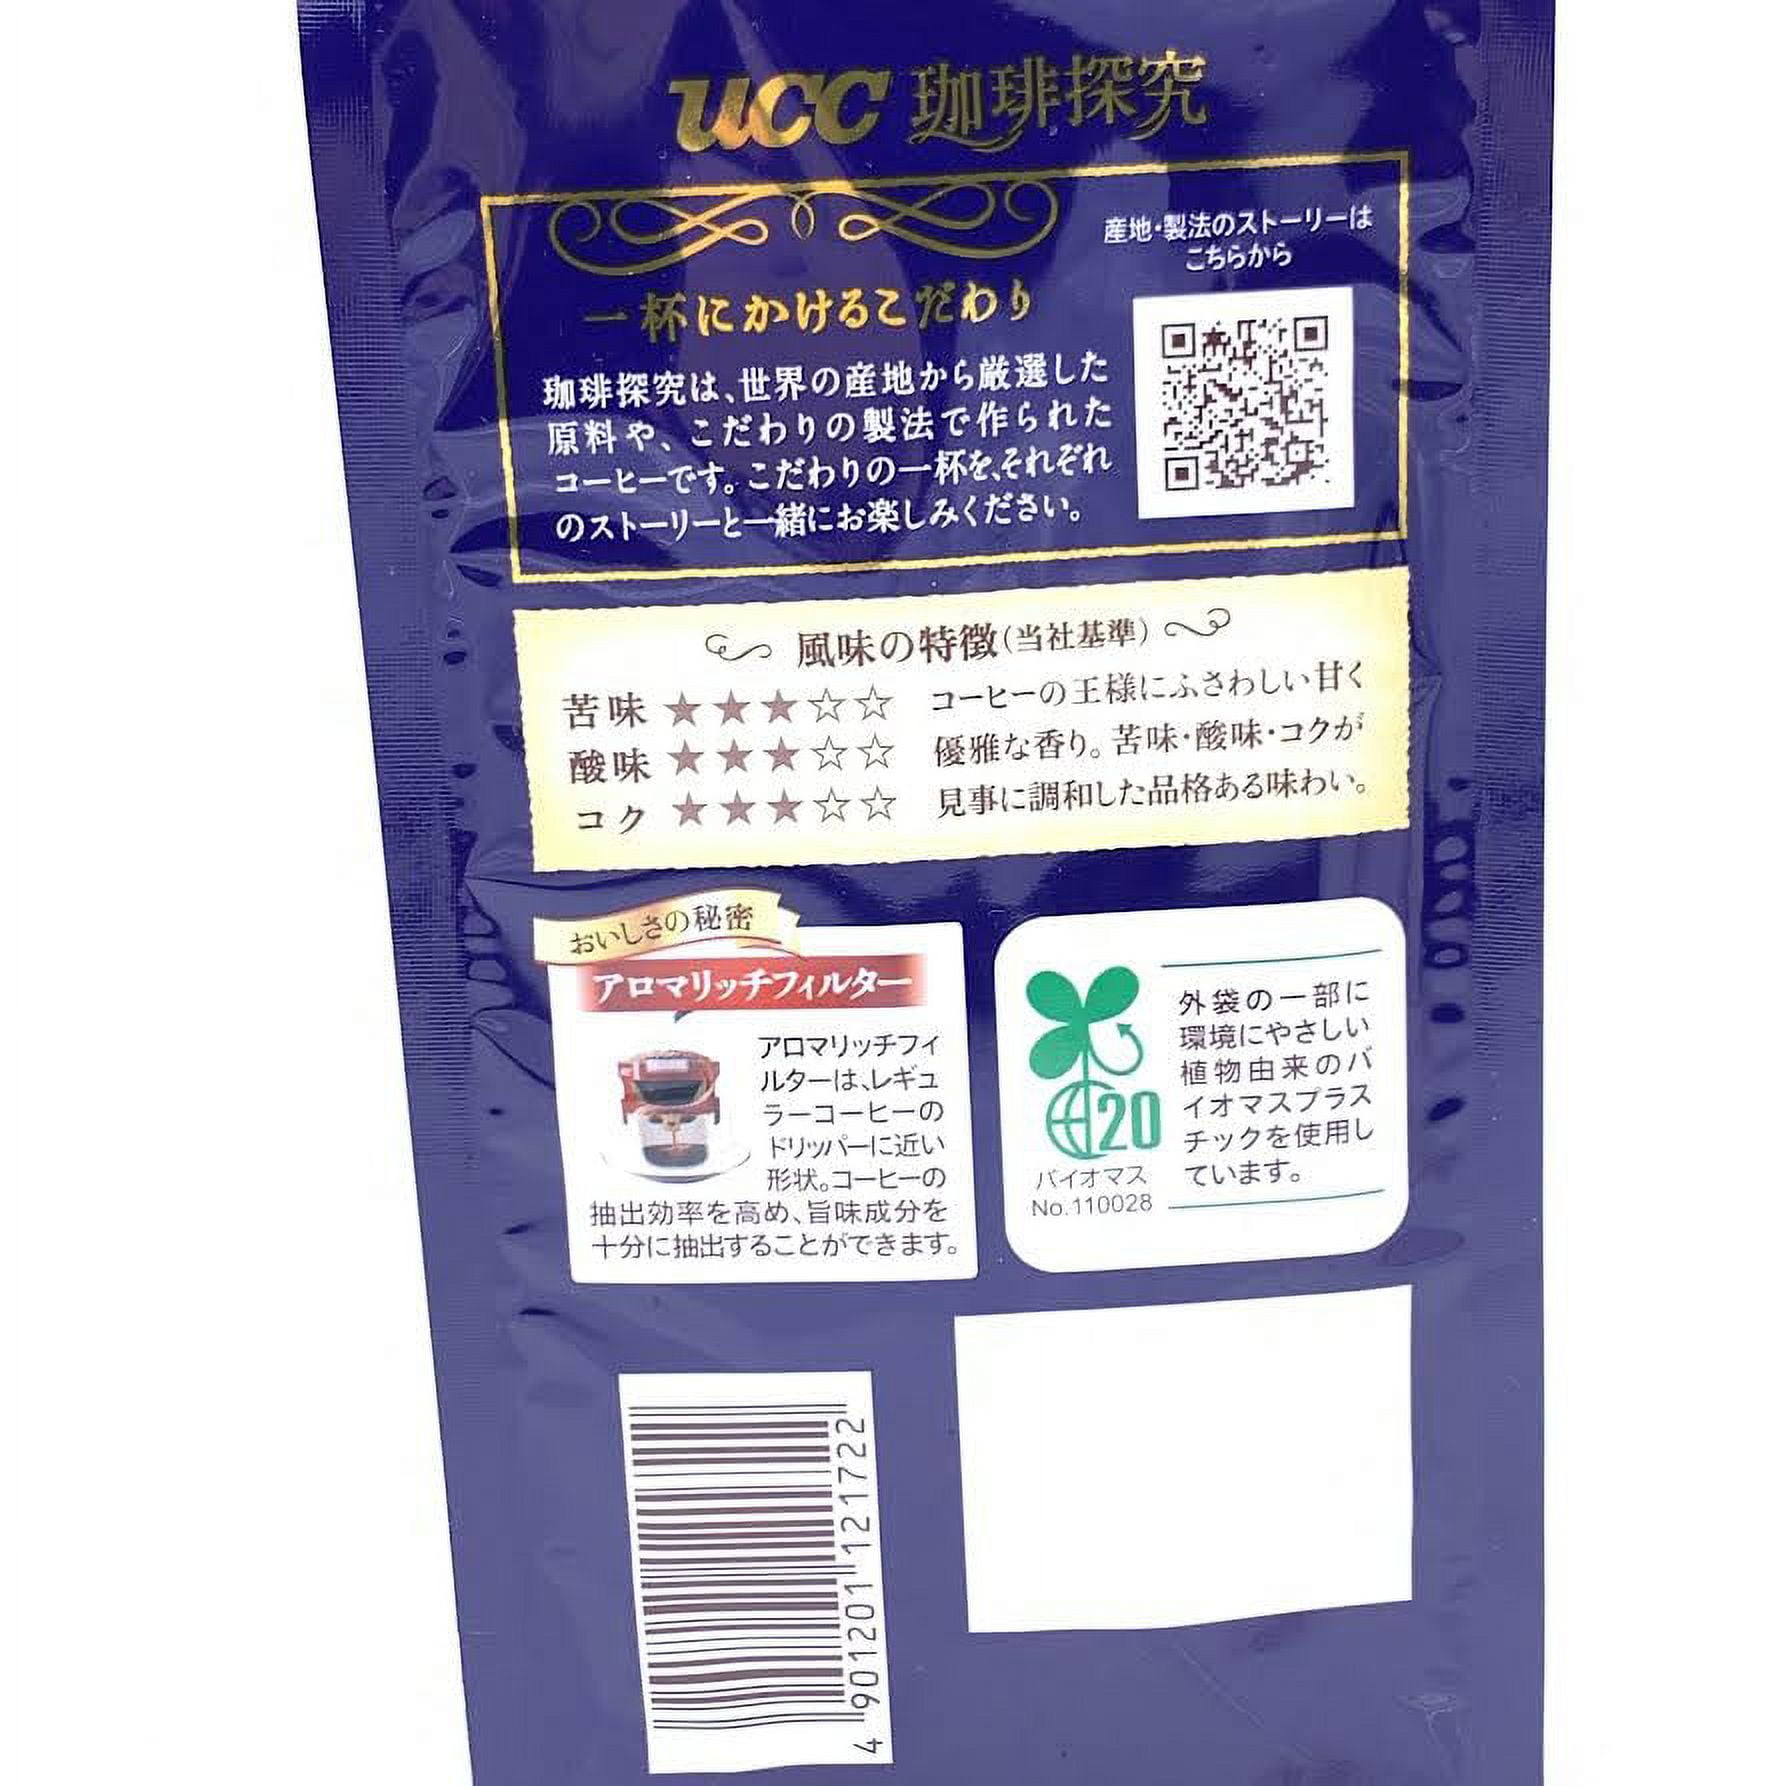 UCC Japan COFFEE TANKYU Blue Mountain Blend Drip Coffee, 5-Pack 40g